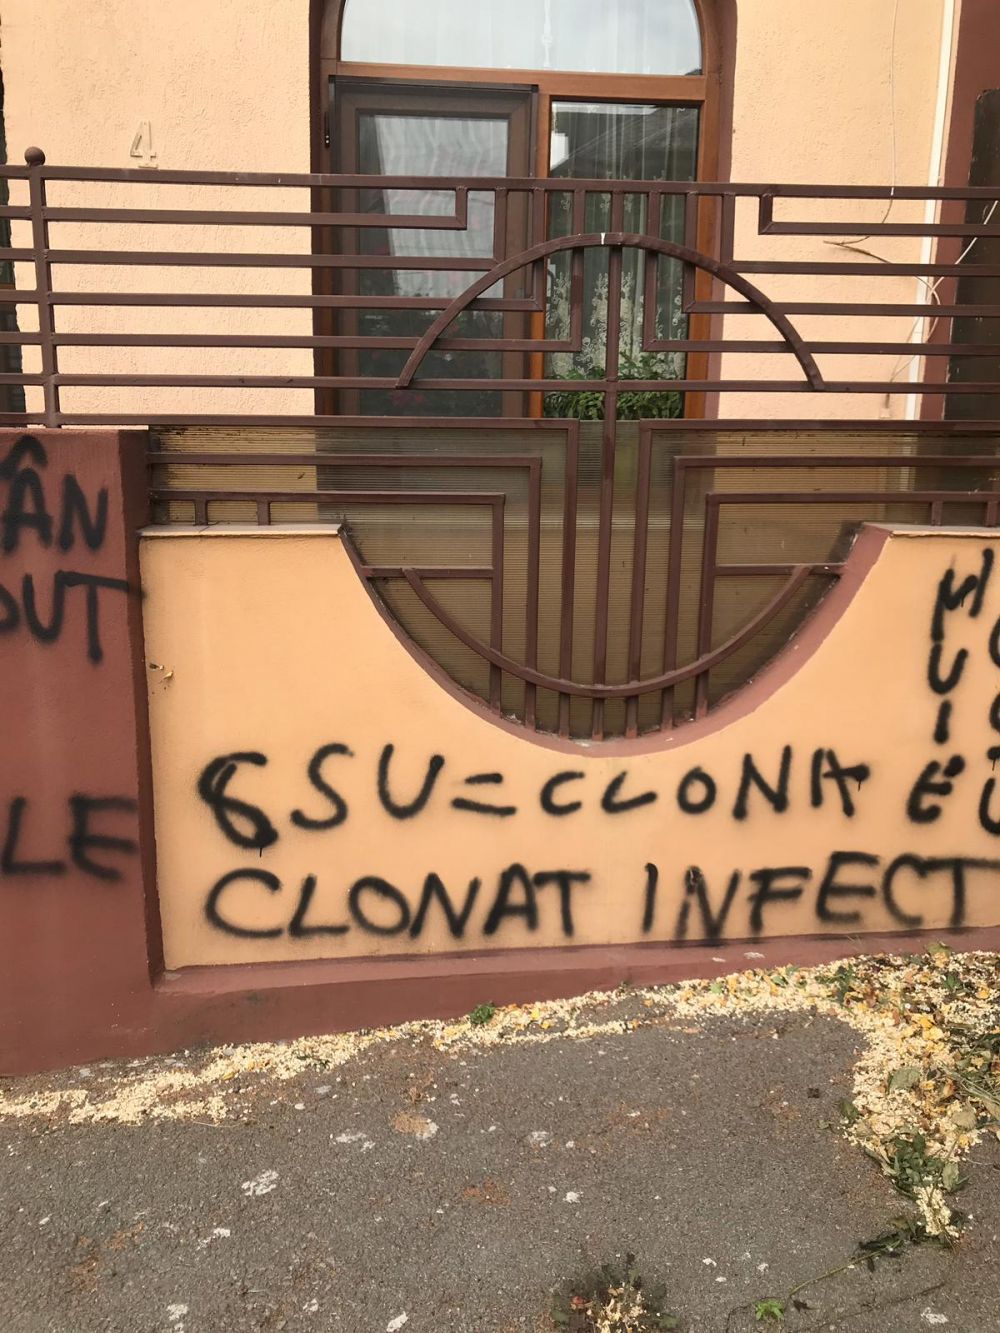 Ultrasii "U" Craiova au vandalizat casa lui Sorin Cartu! Jigniri grosolane la adresa presedintelui Universitatii_2